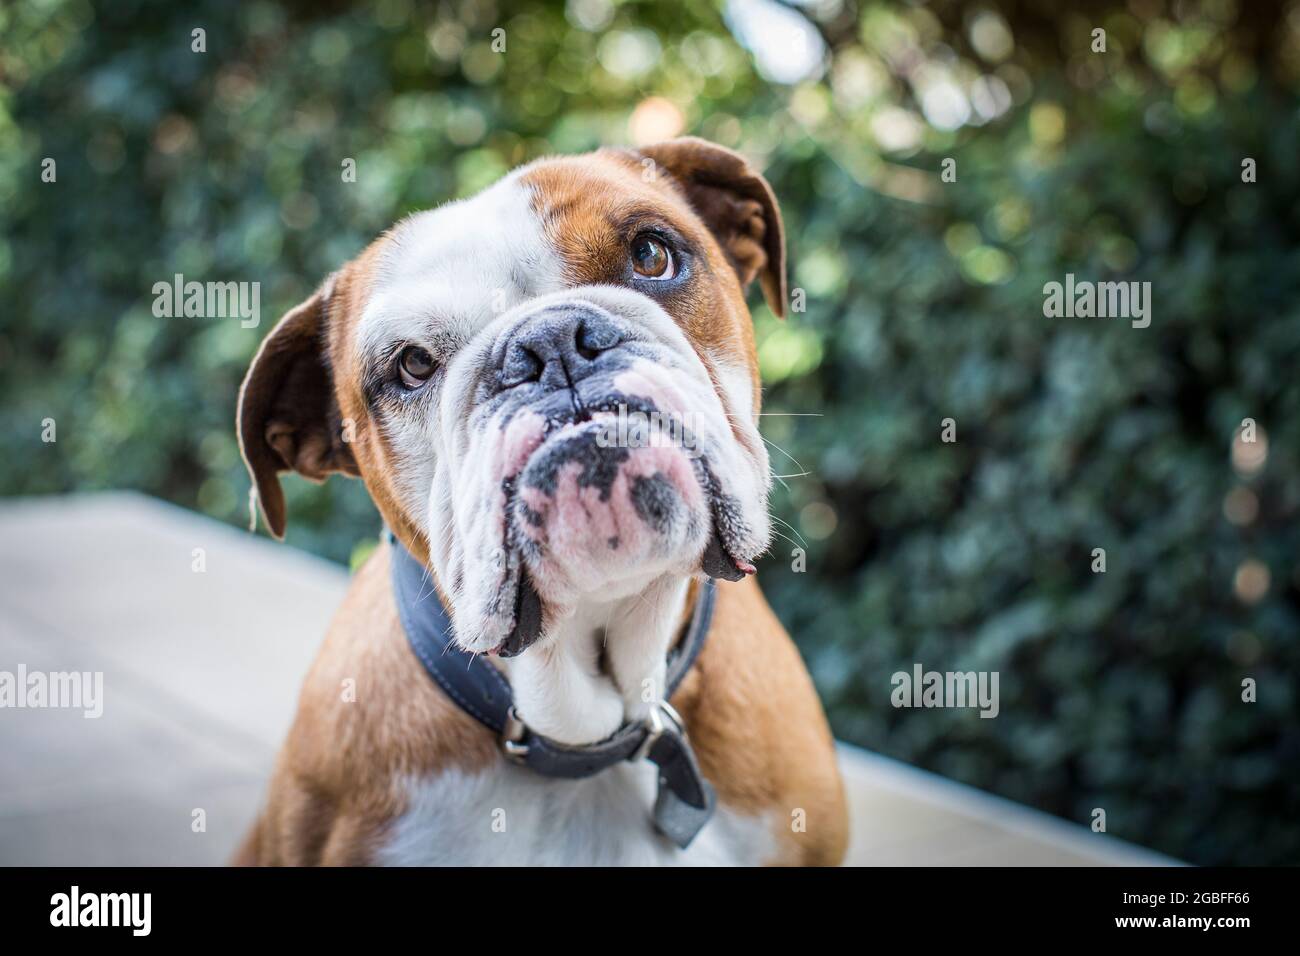 English Bulldog with an underbite Stock Photo